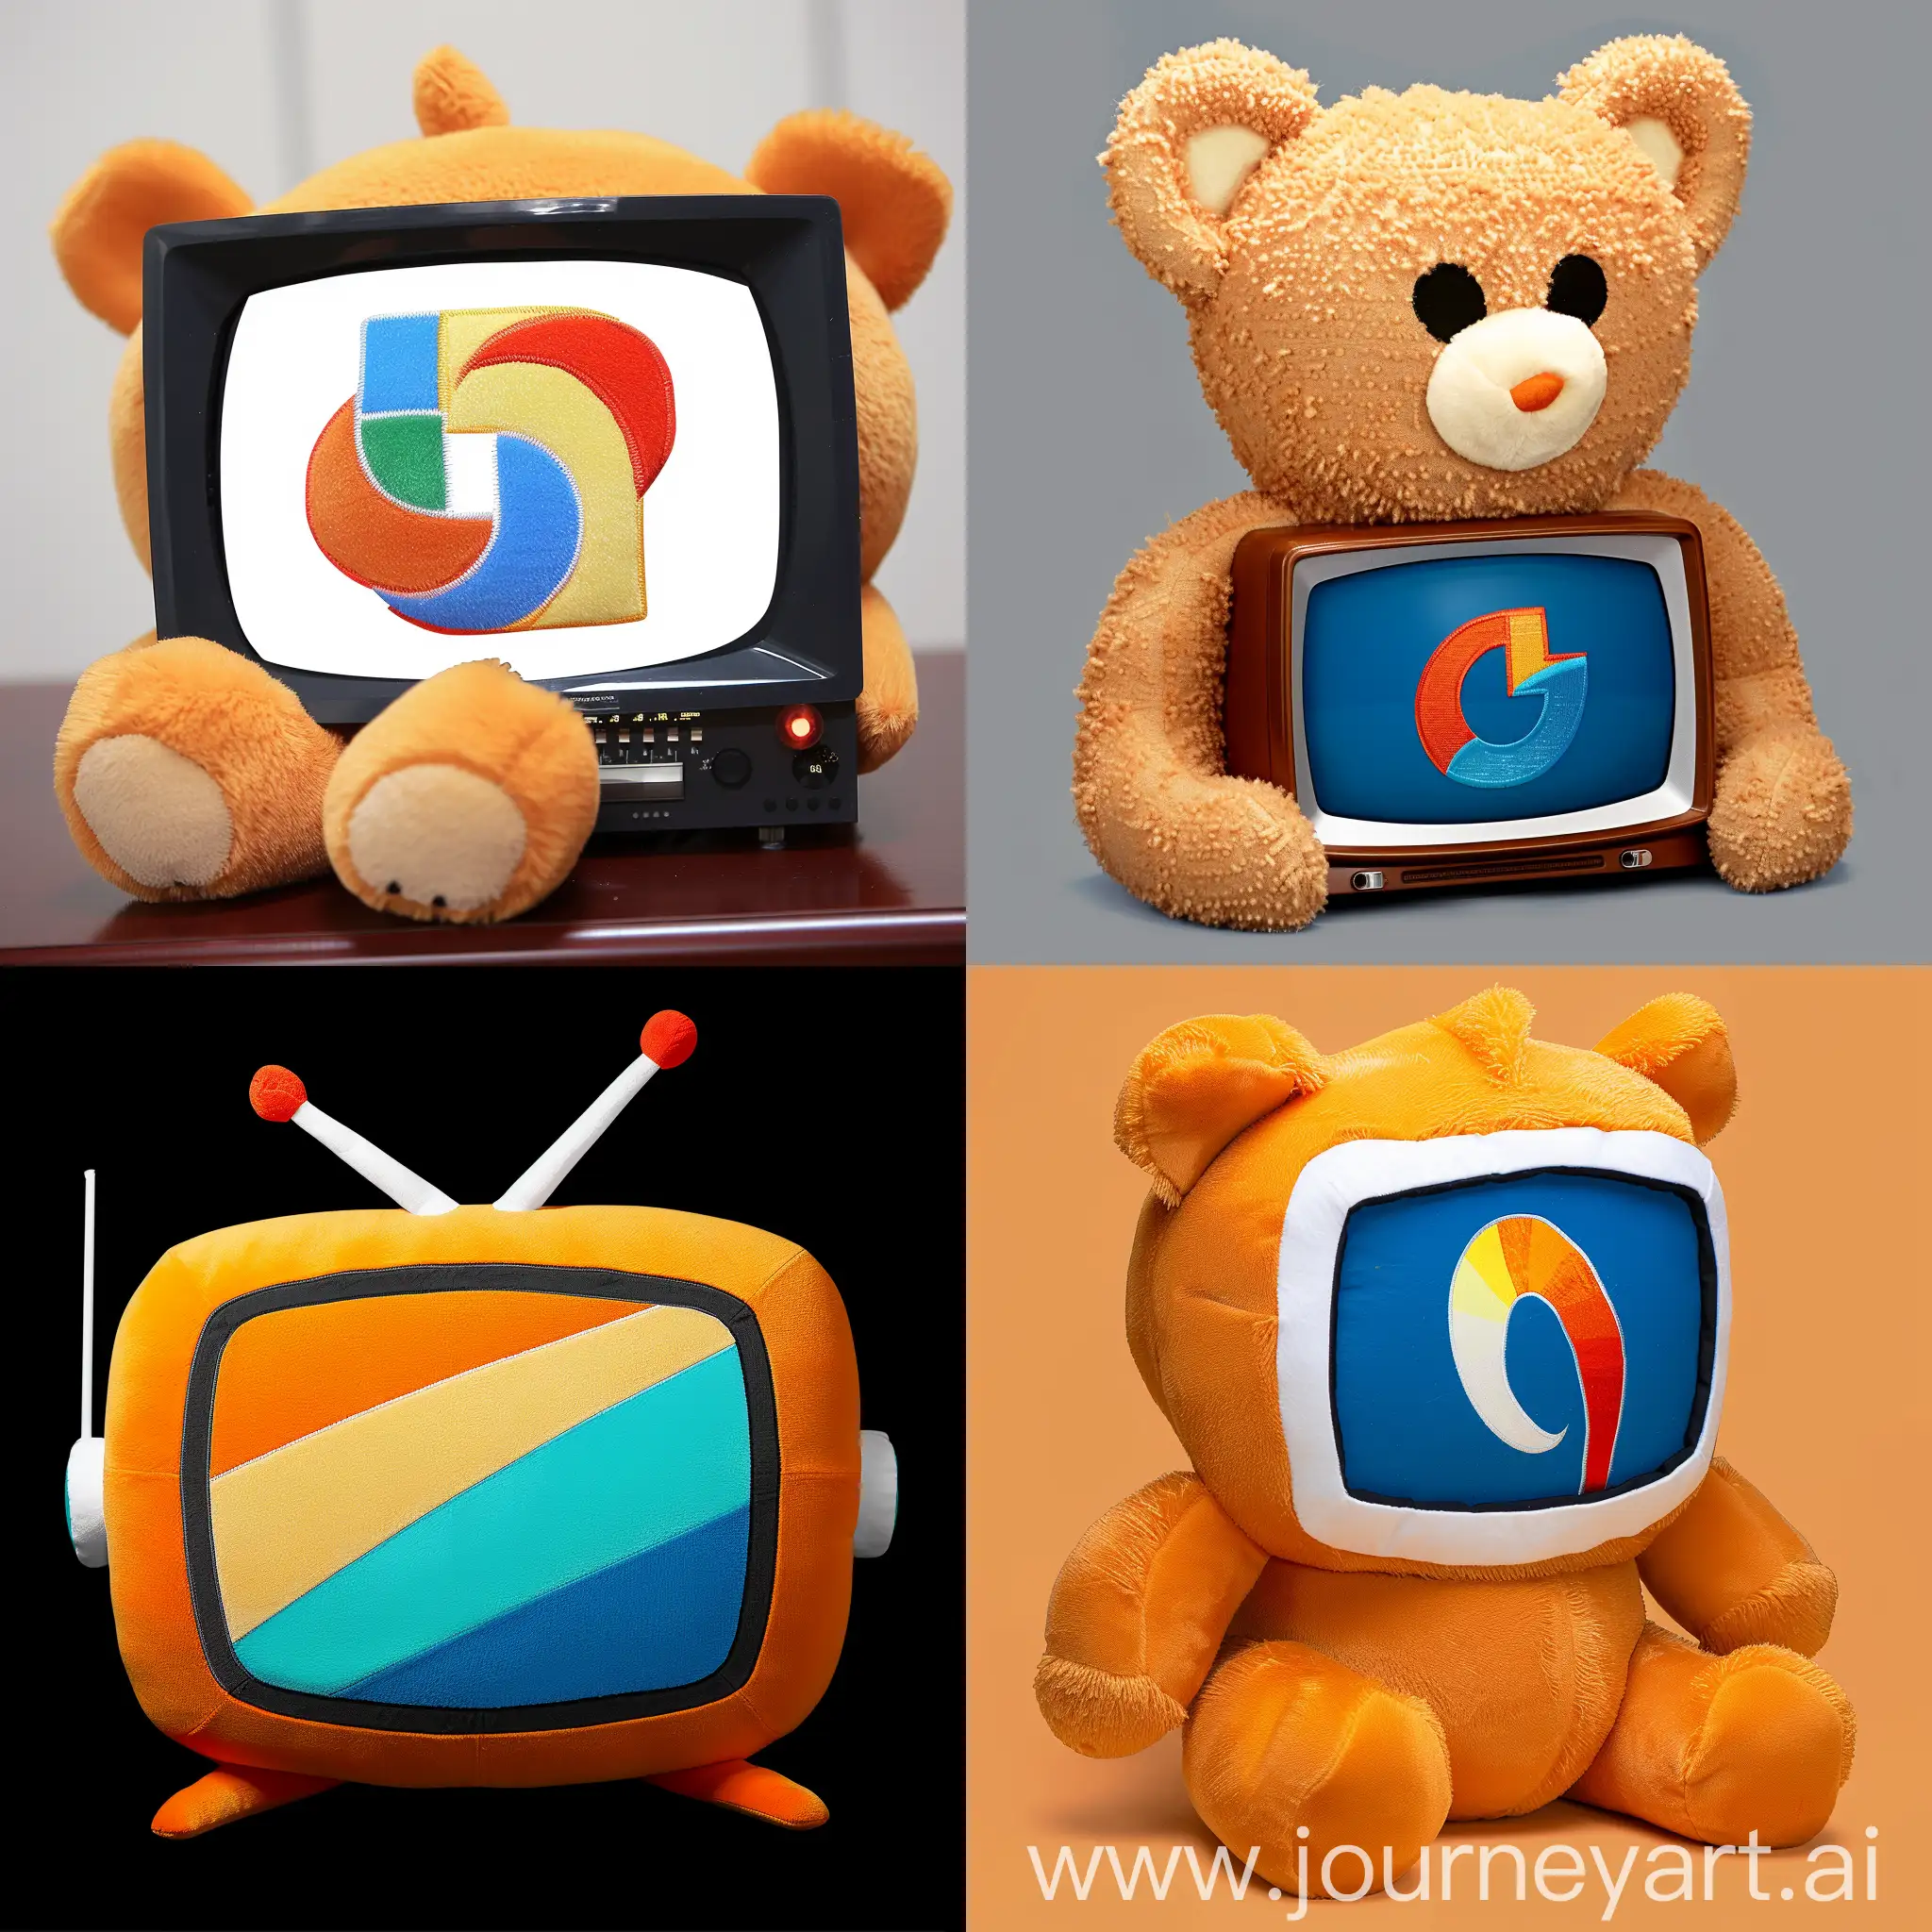 Plush-Toy-Inspired-by-TV-Station-Logo